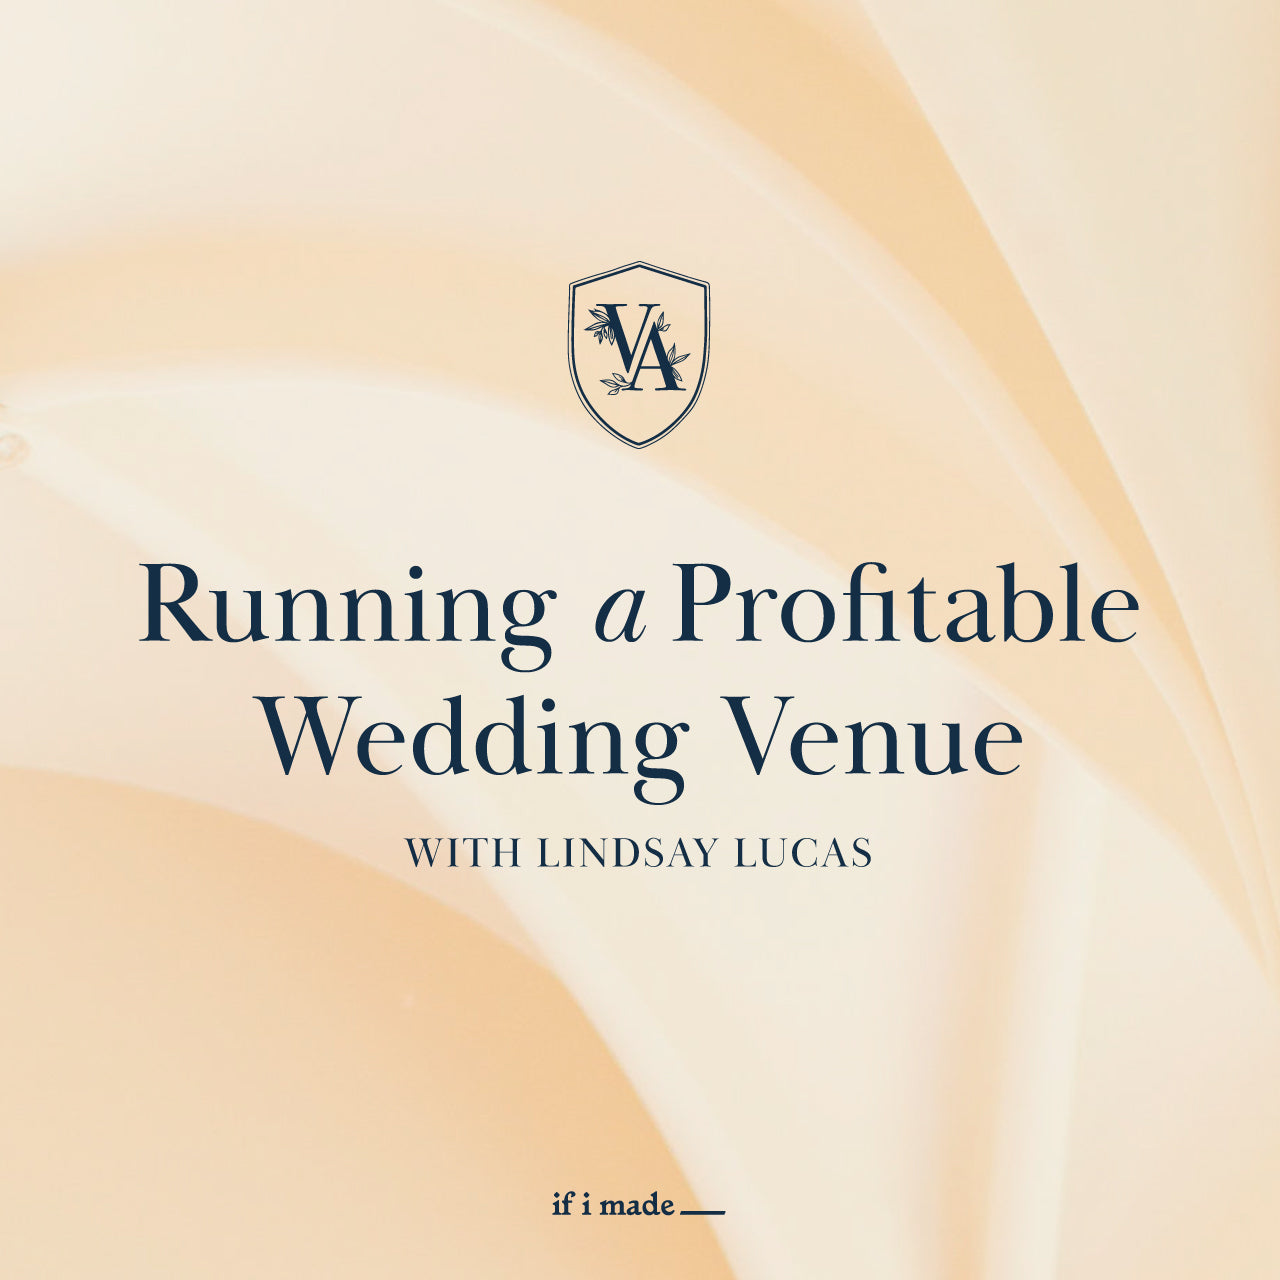 Running a Profitable Wedding Venue with Lindsay Lucas (SOP0921)